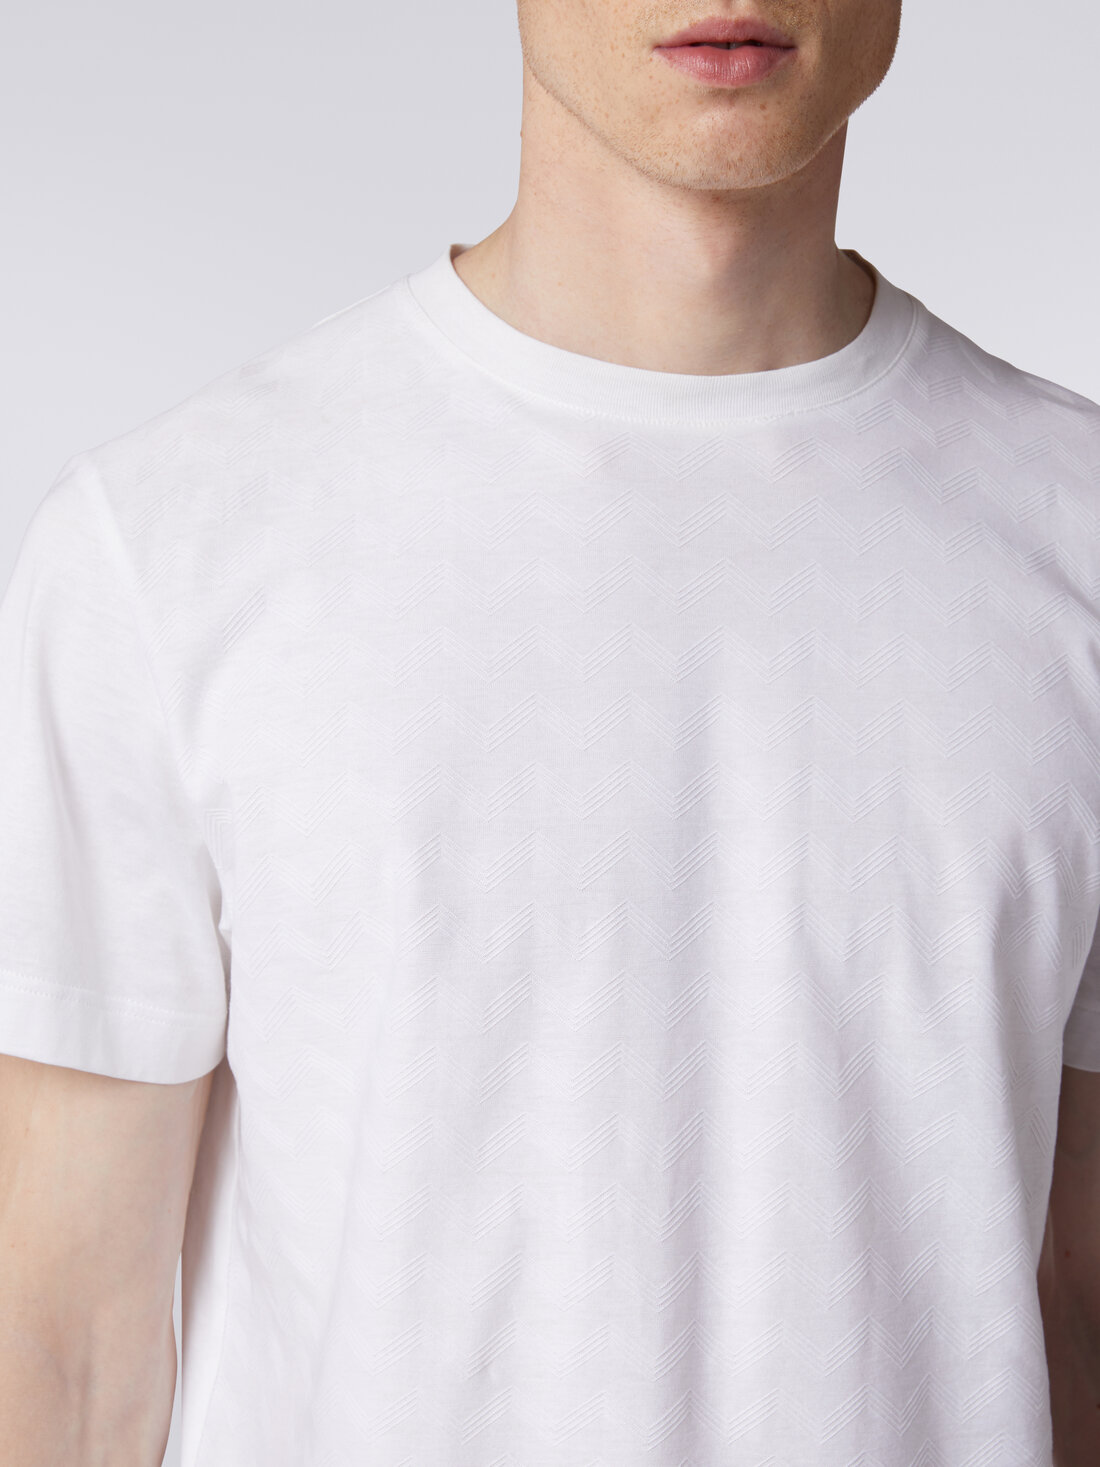 Kurzärmeliges Baumwoll-T-Shirt mit Zickzackmuster, Weiß  - US24SL0CBJ00B4S01BI - 4